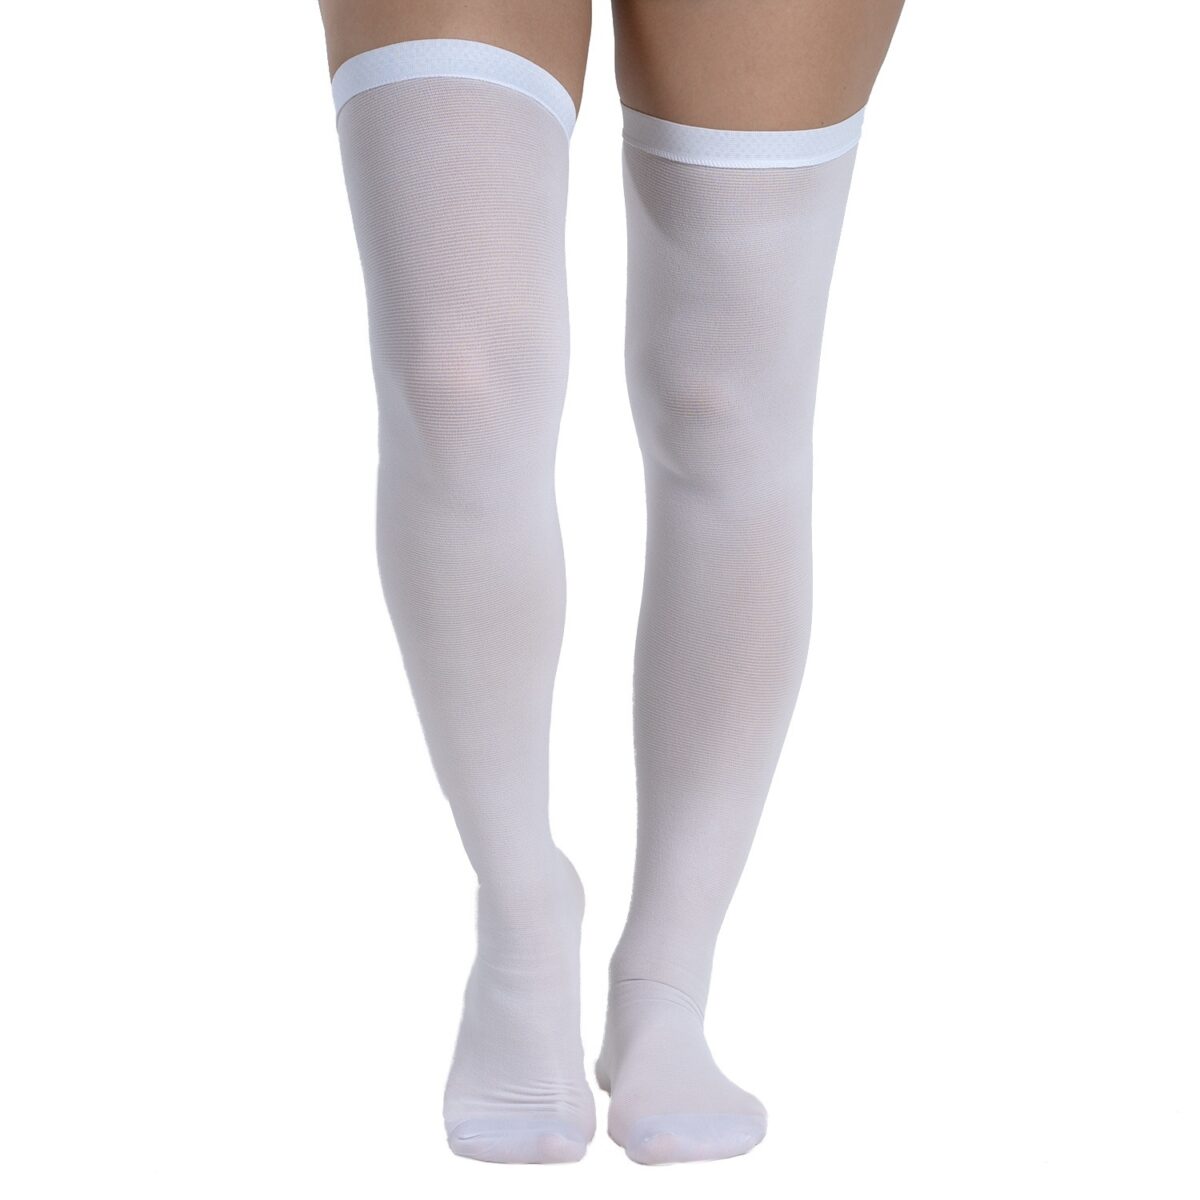 wingmed orthopedic equipments W1320 anti embolism stockings thigh high pair 20